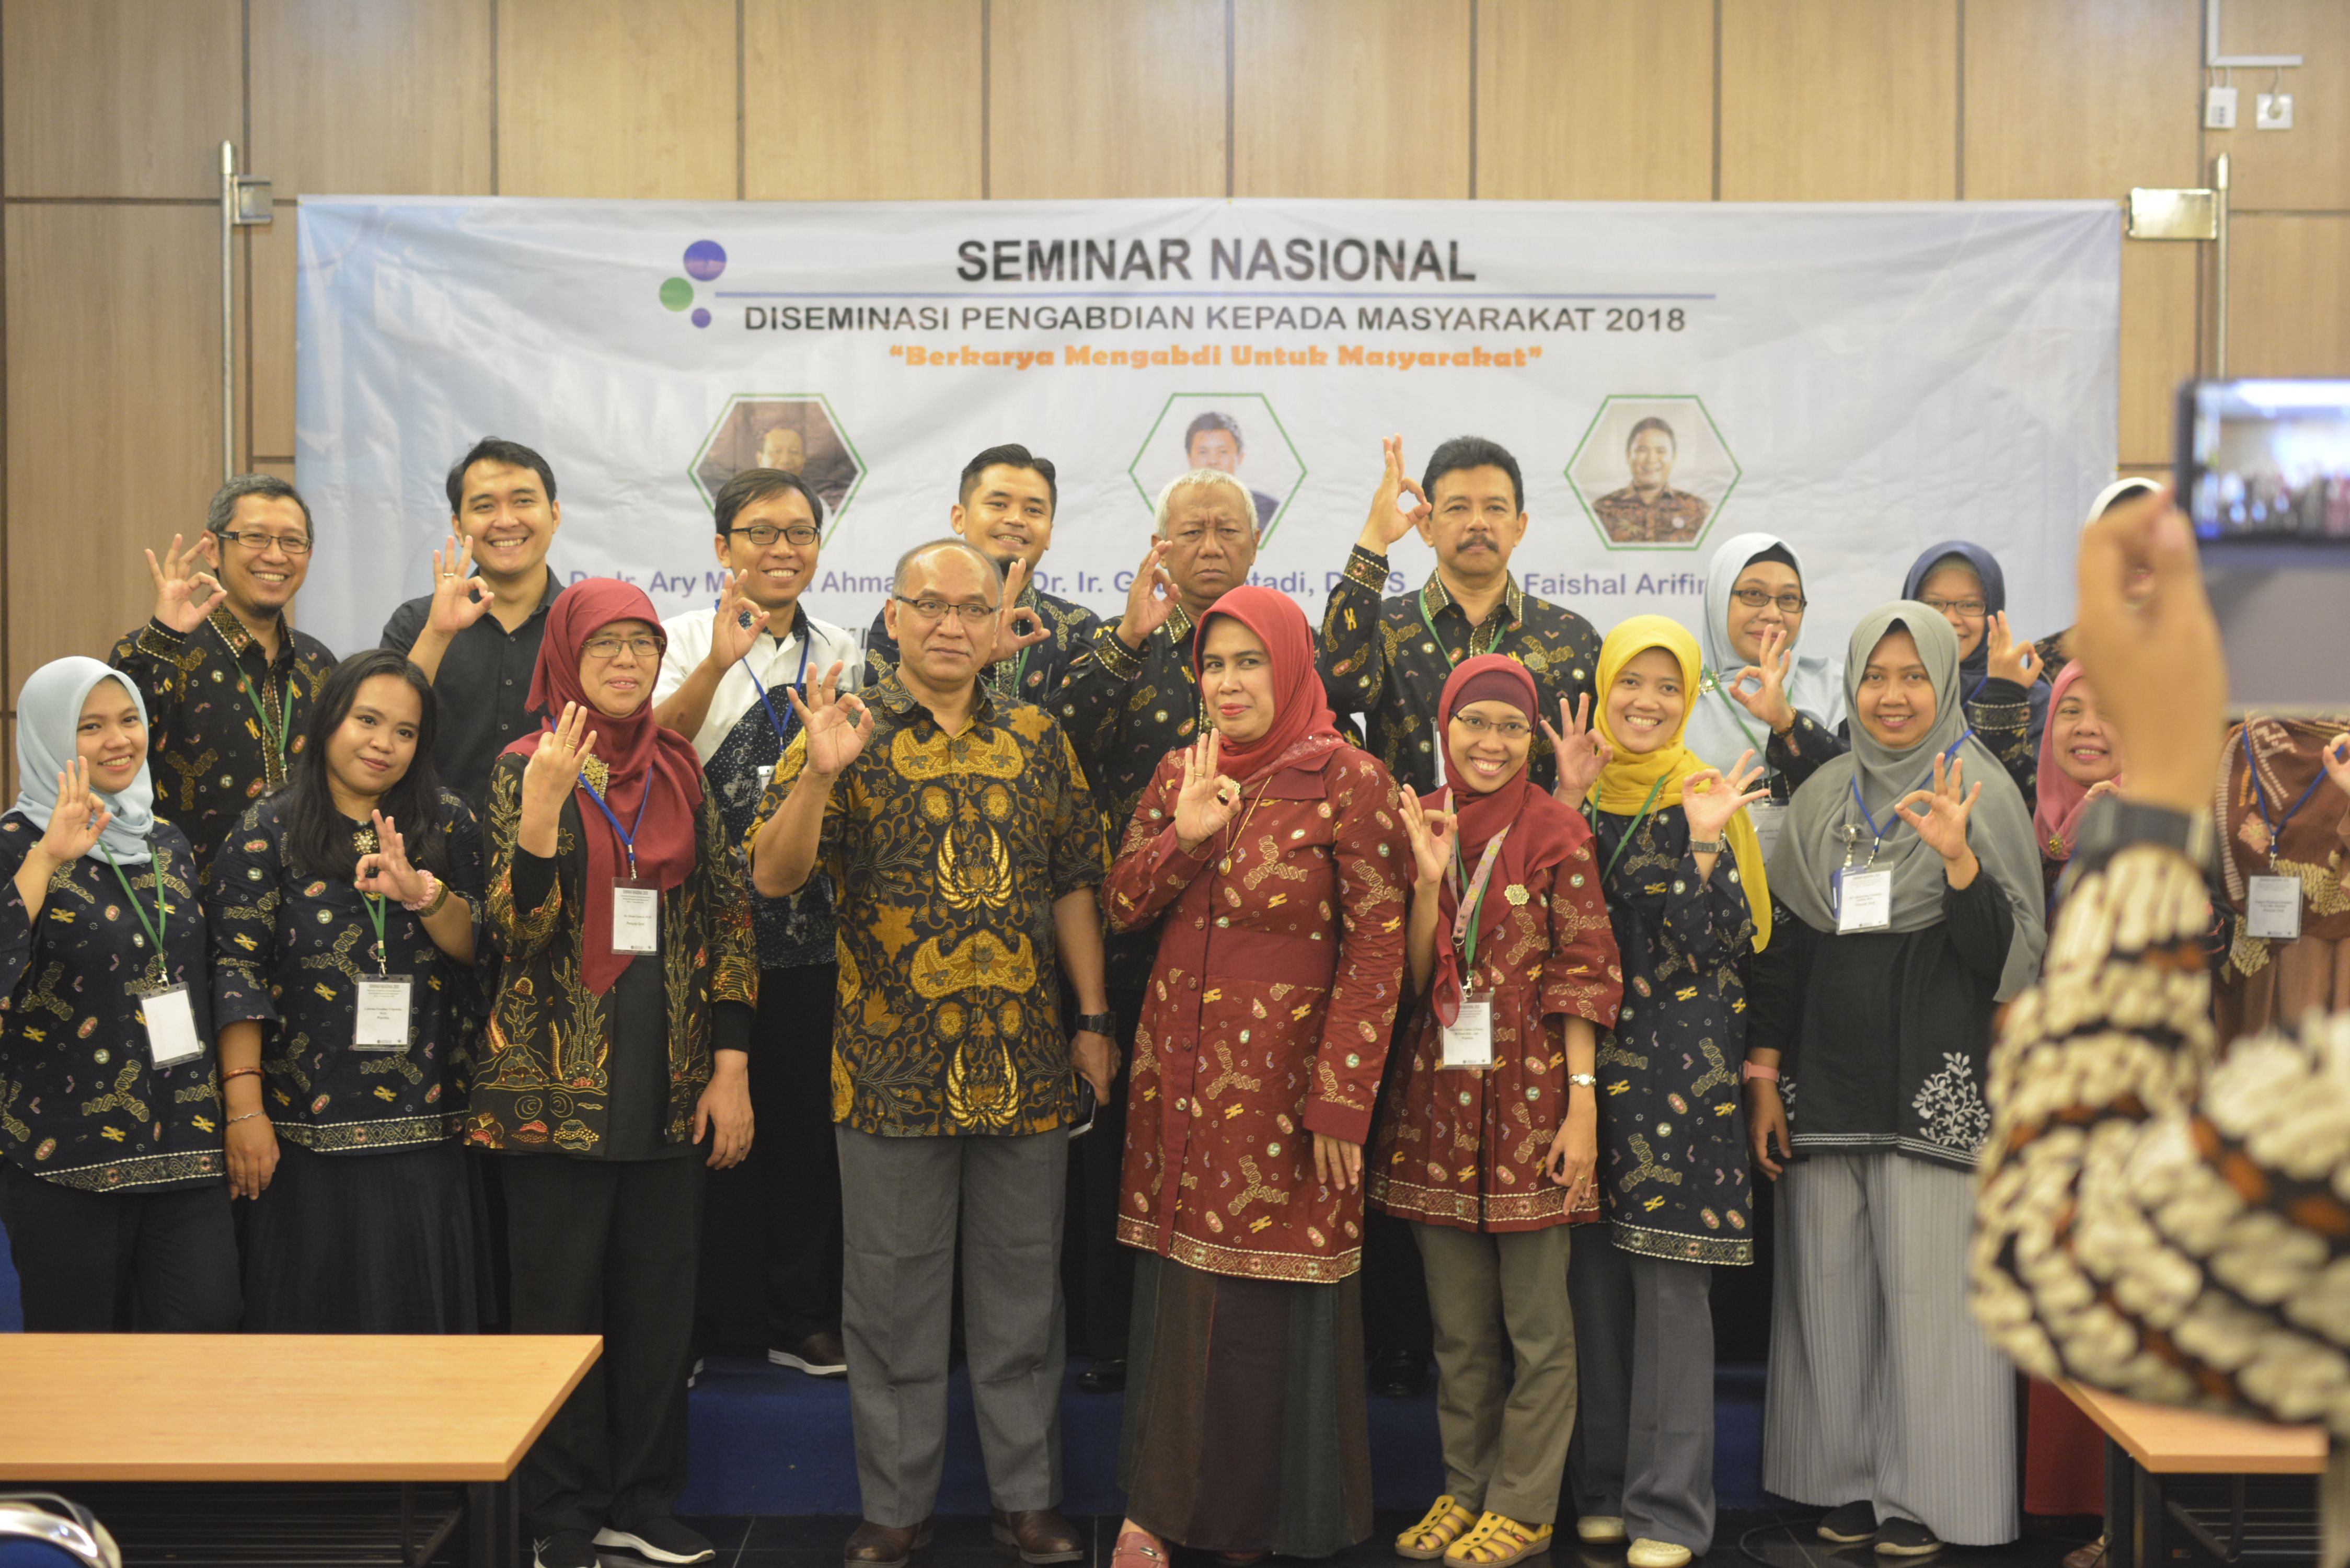 National Seminar on Dissemination of Community Service